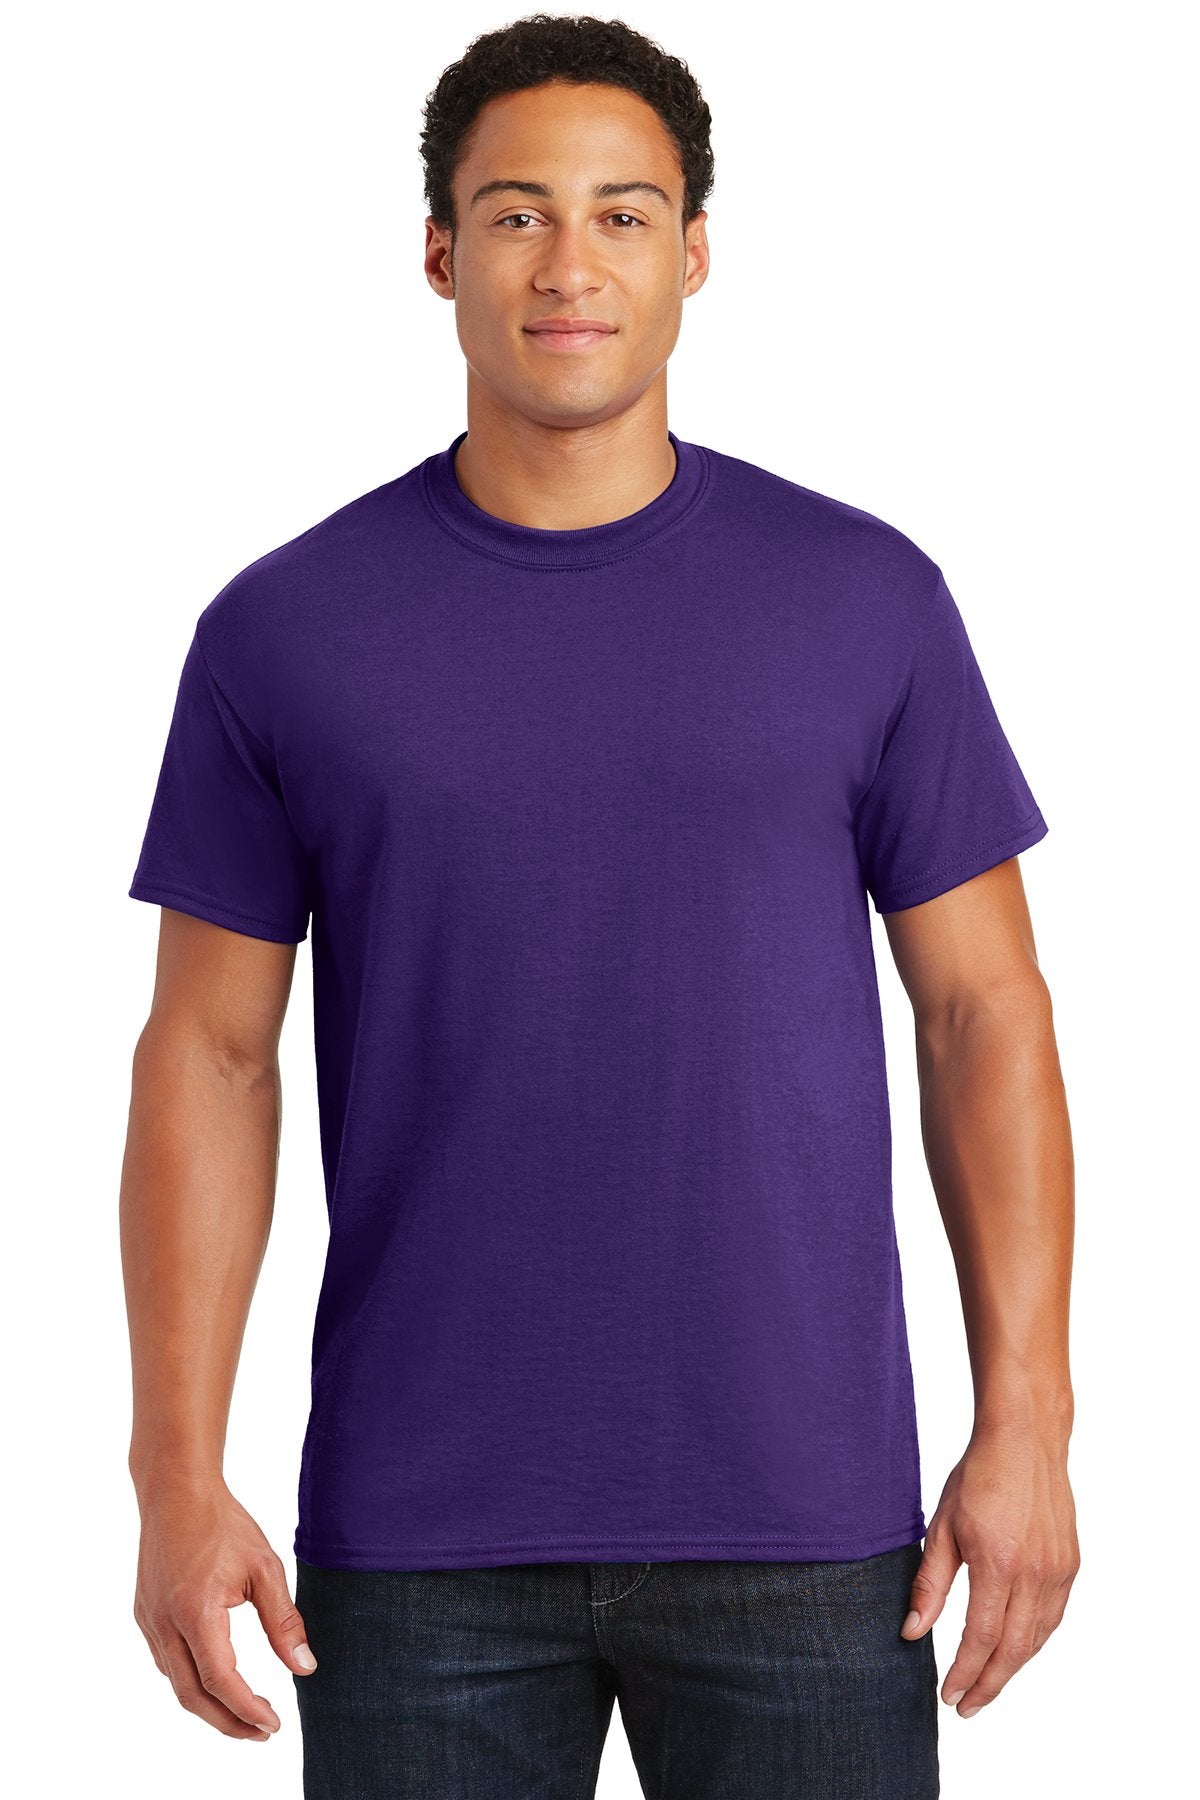 gildan dryblend cotton poly t shirt 8000 purple